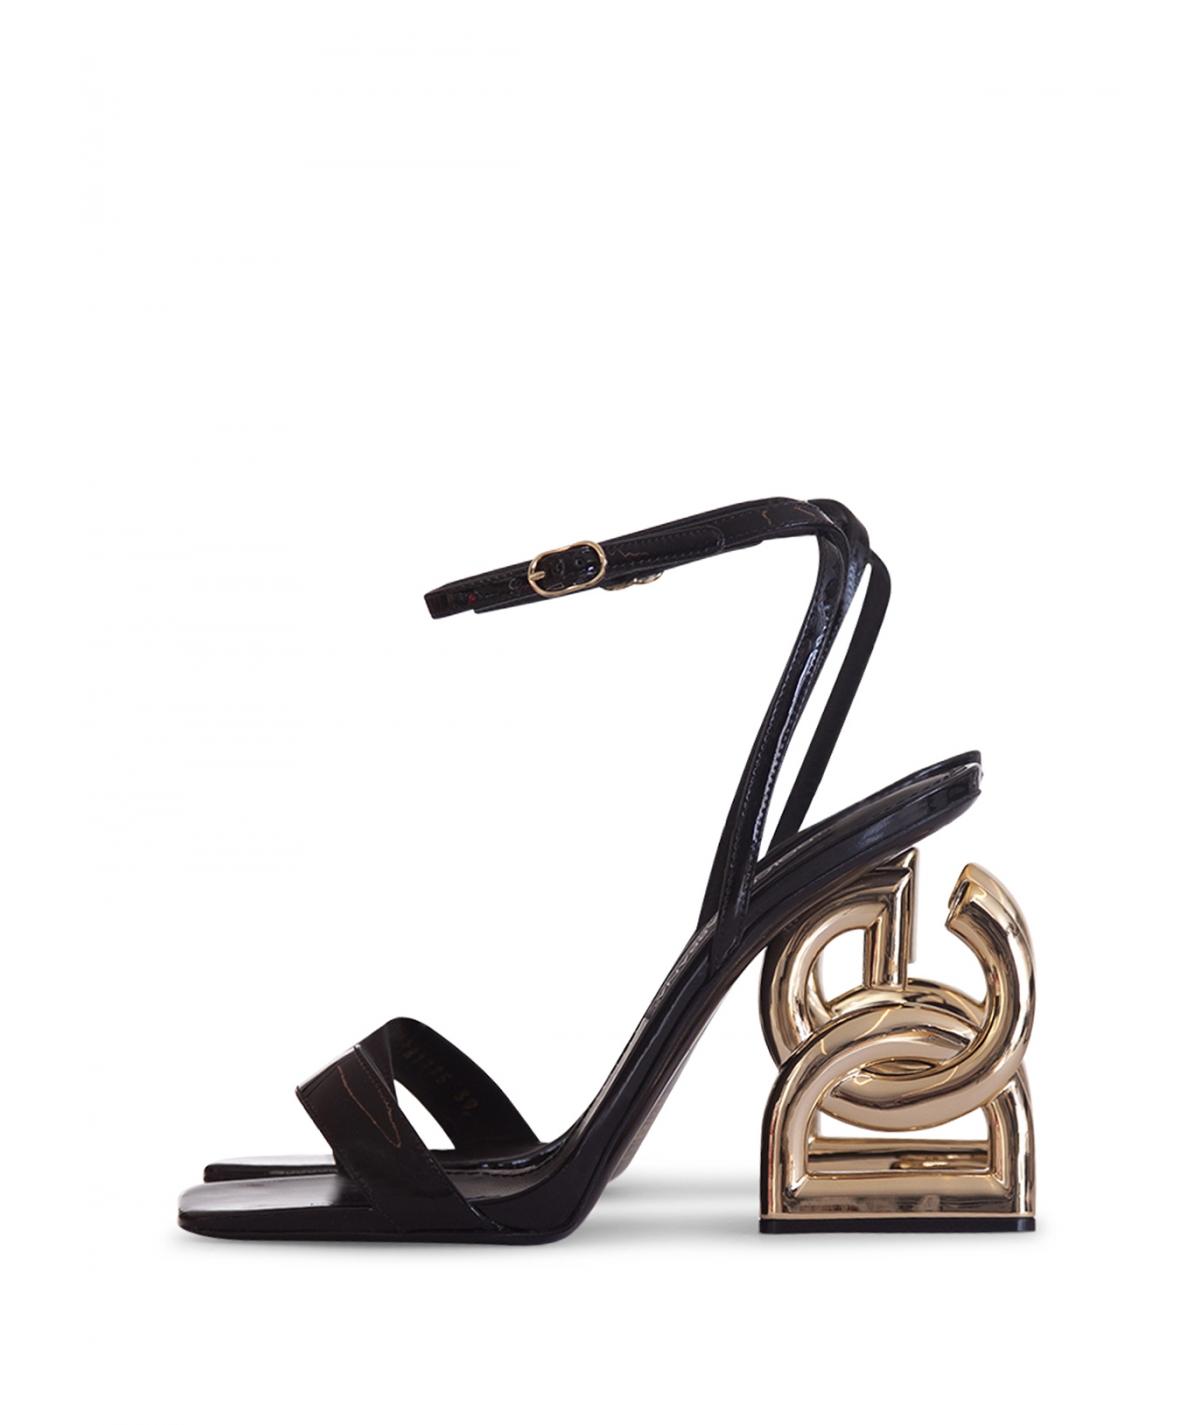 Dolce & Gabbana Leather Dg Pop Keira 105mm Sandals in Black - Lyst